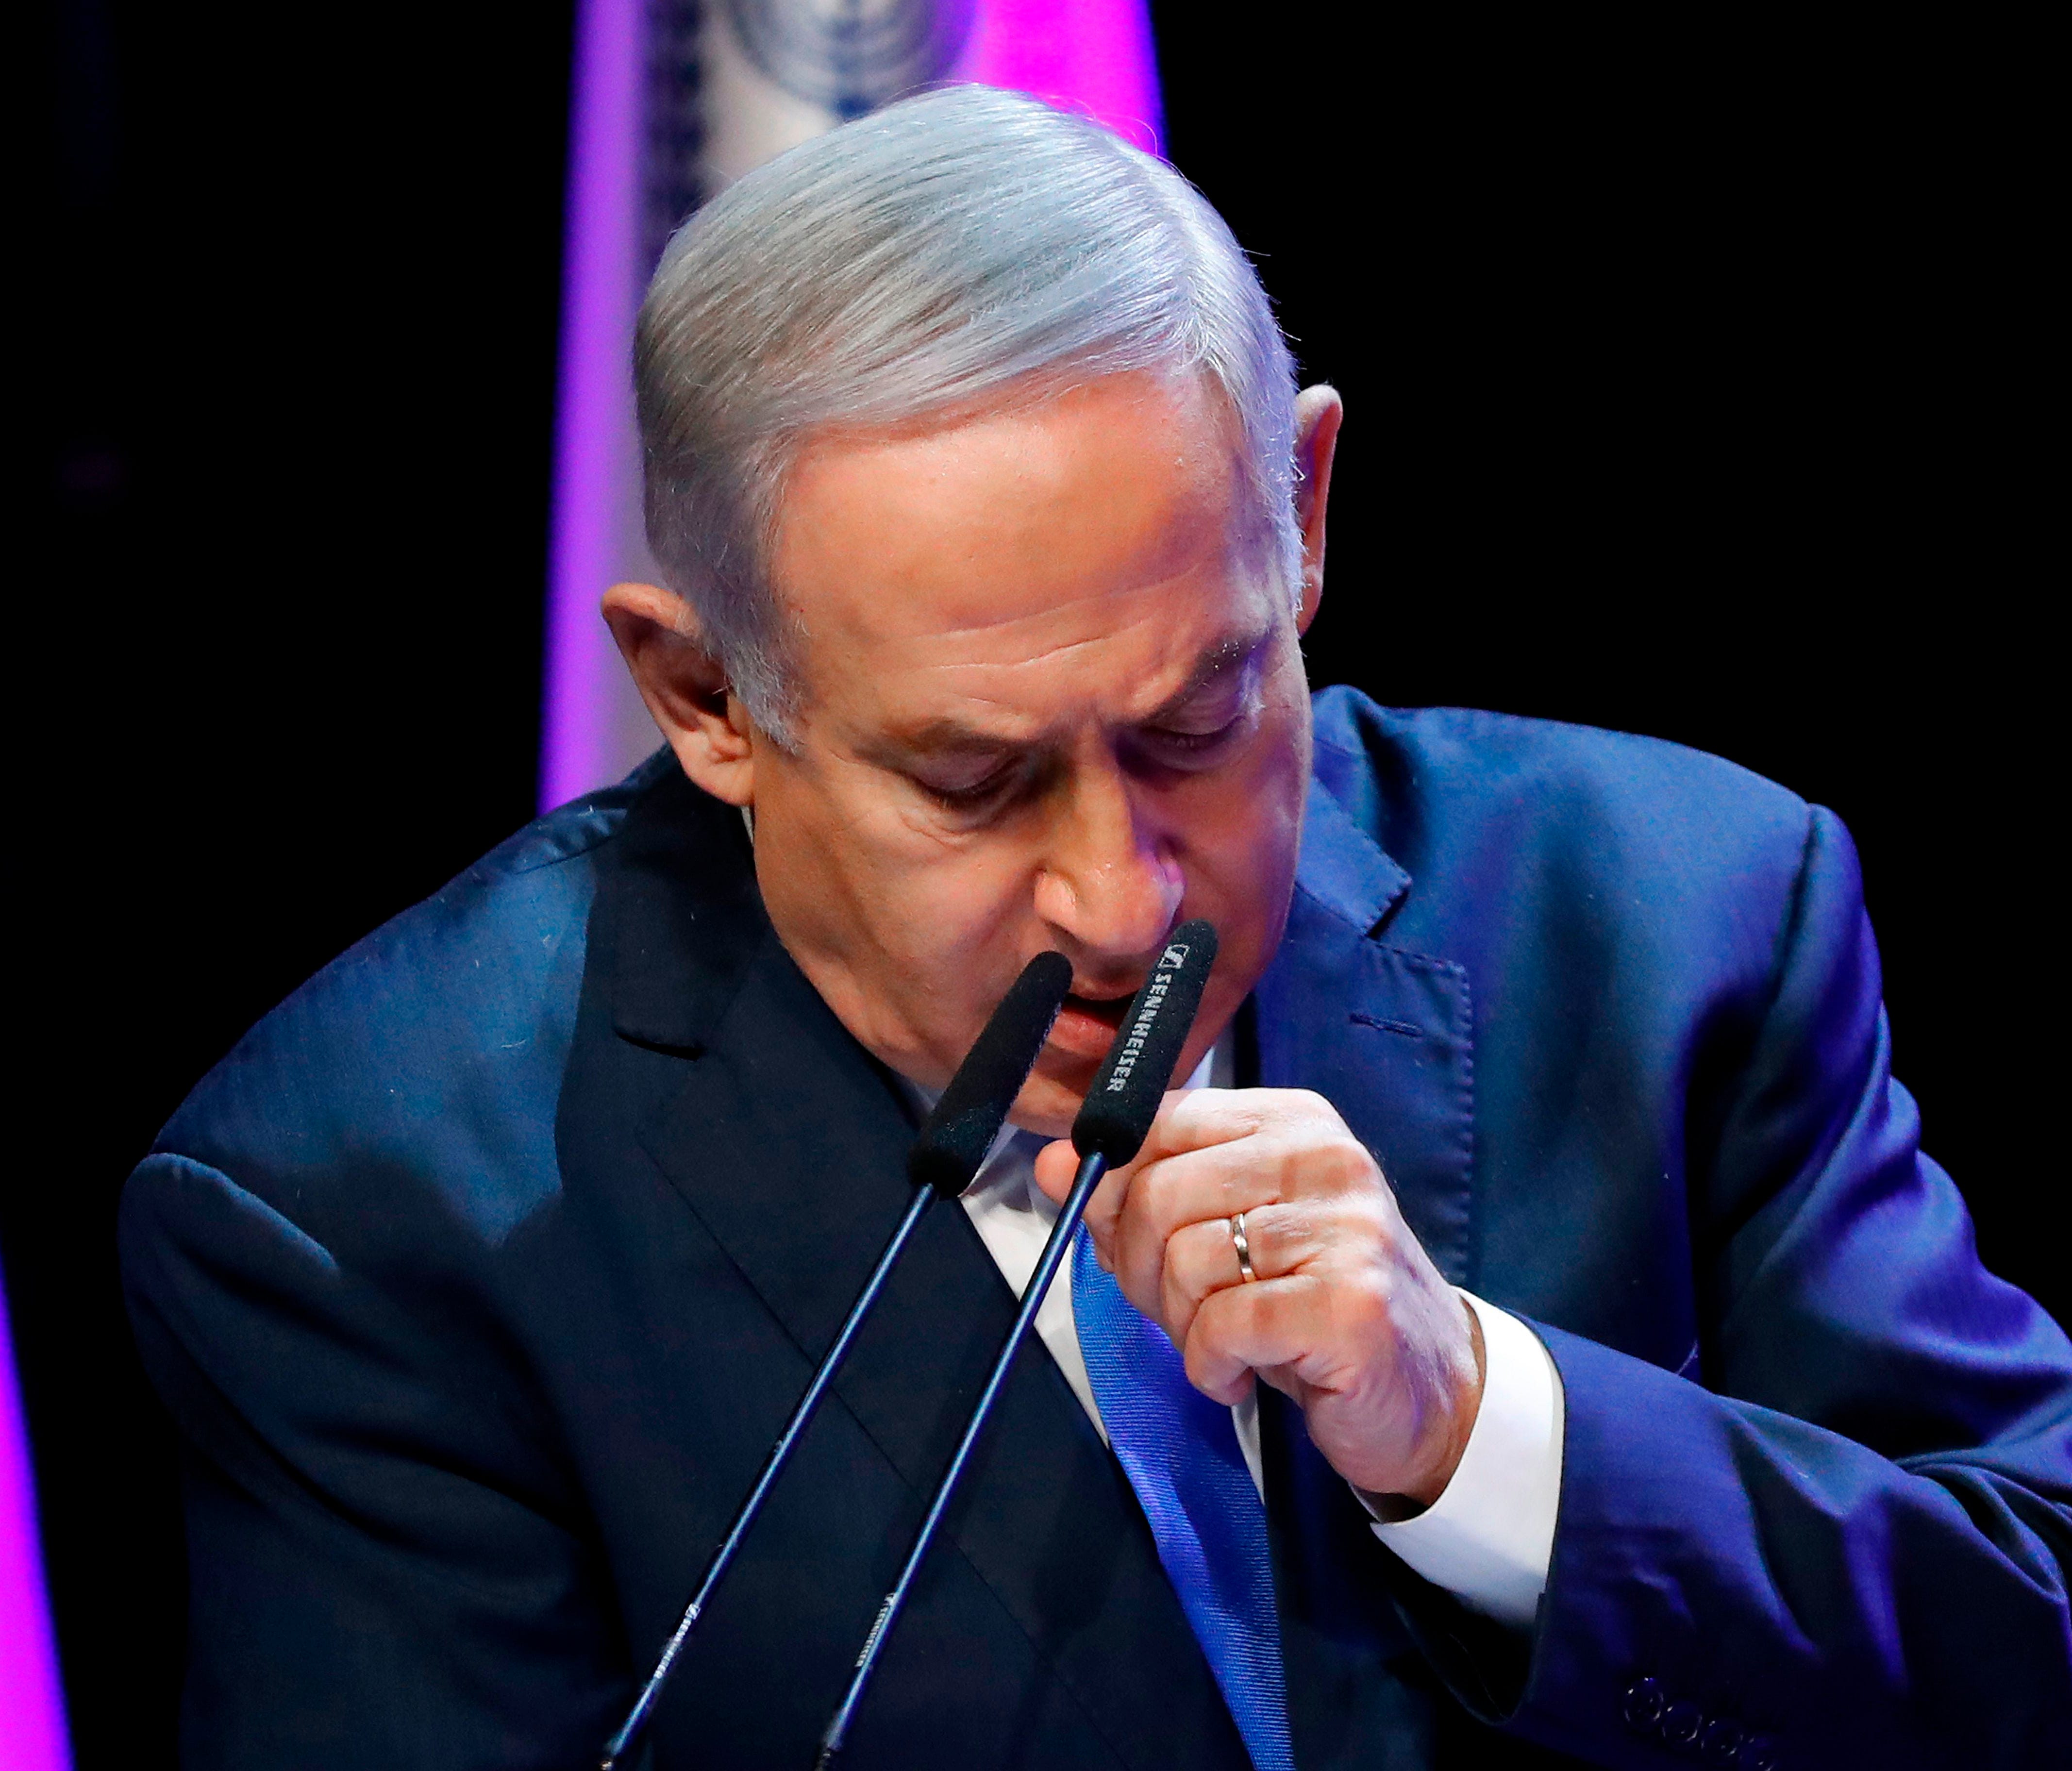 Israeli Prime Minister Benjamin Netanyahu addresses the annual health conference in Tel Aviv on March 27, 2018.